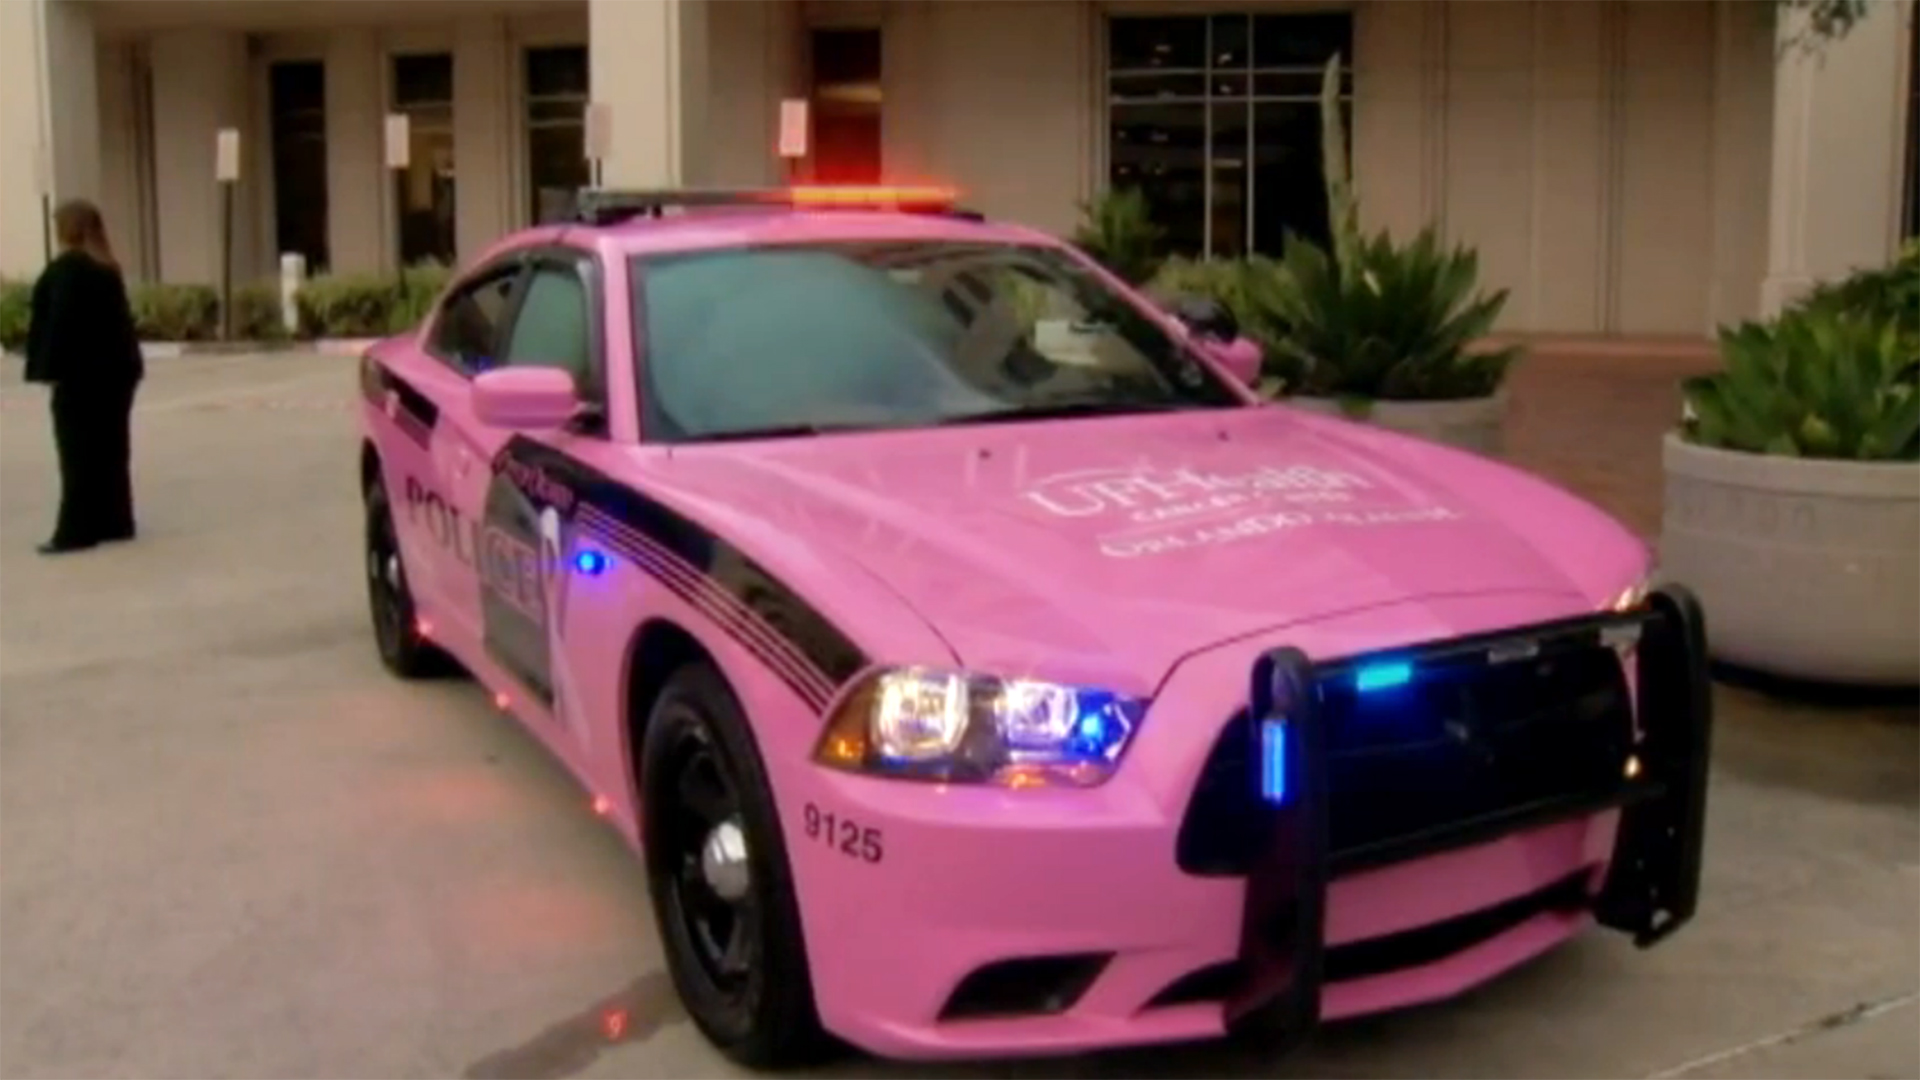 Cop Battling Stage 4 Breast Cancer Gets Pink Patrol Car  NBC News